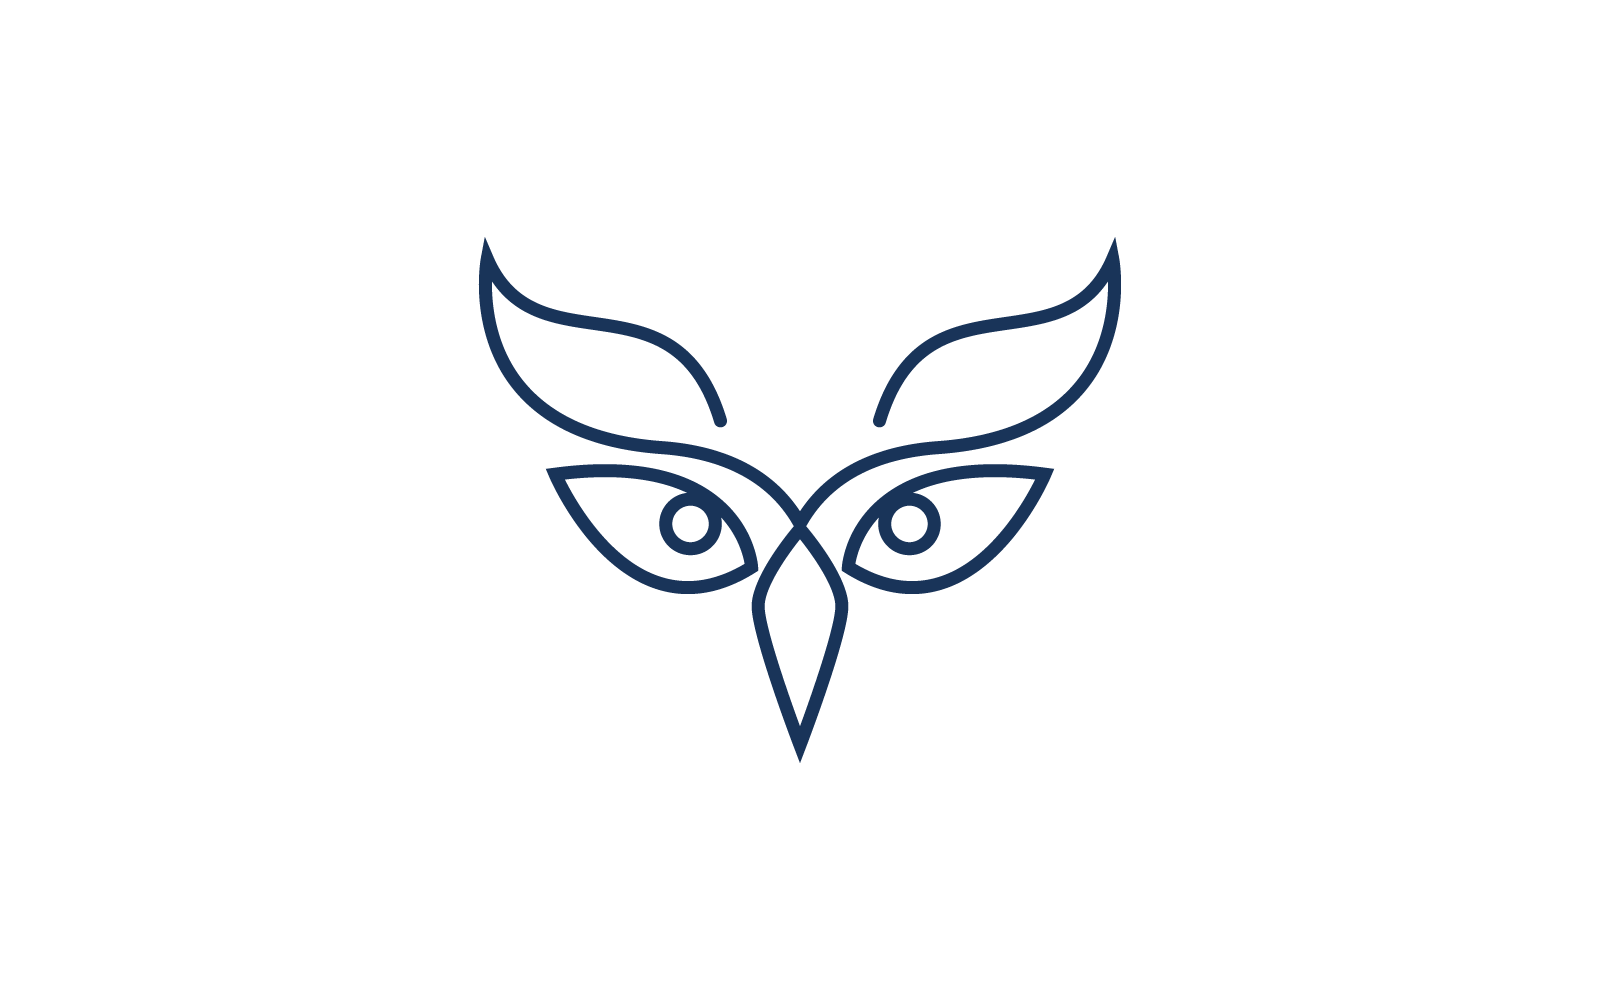 Owl logo vector illustration flat design